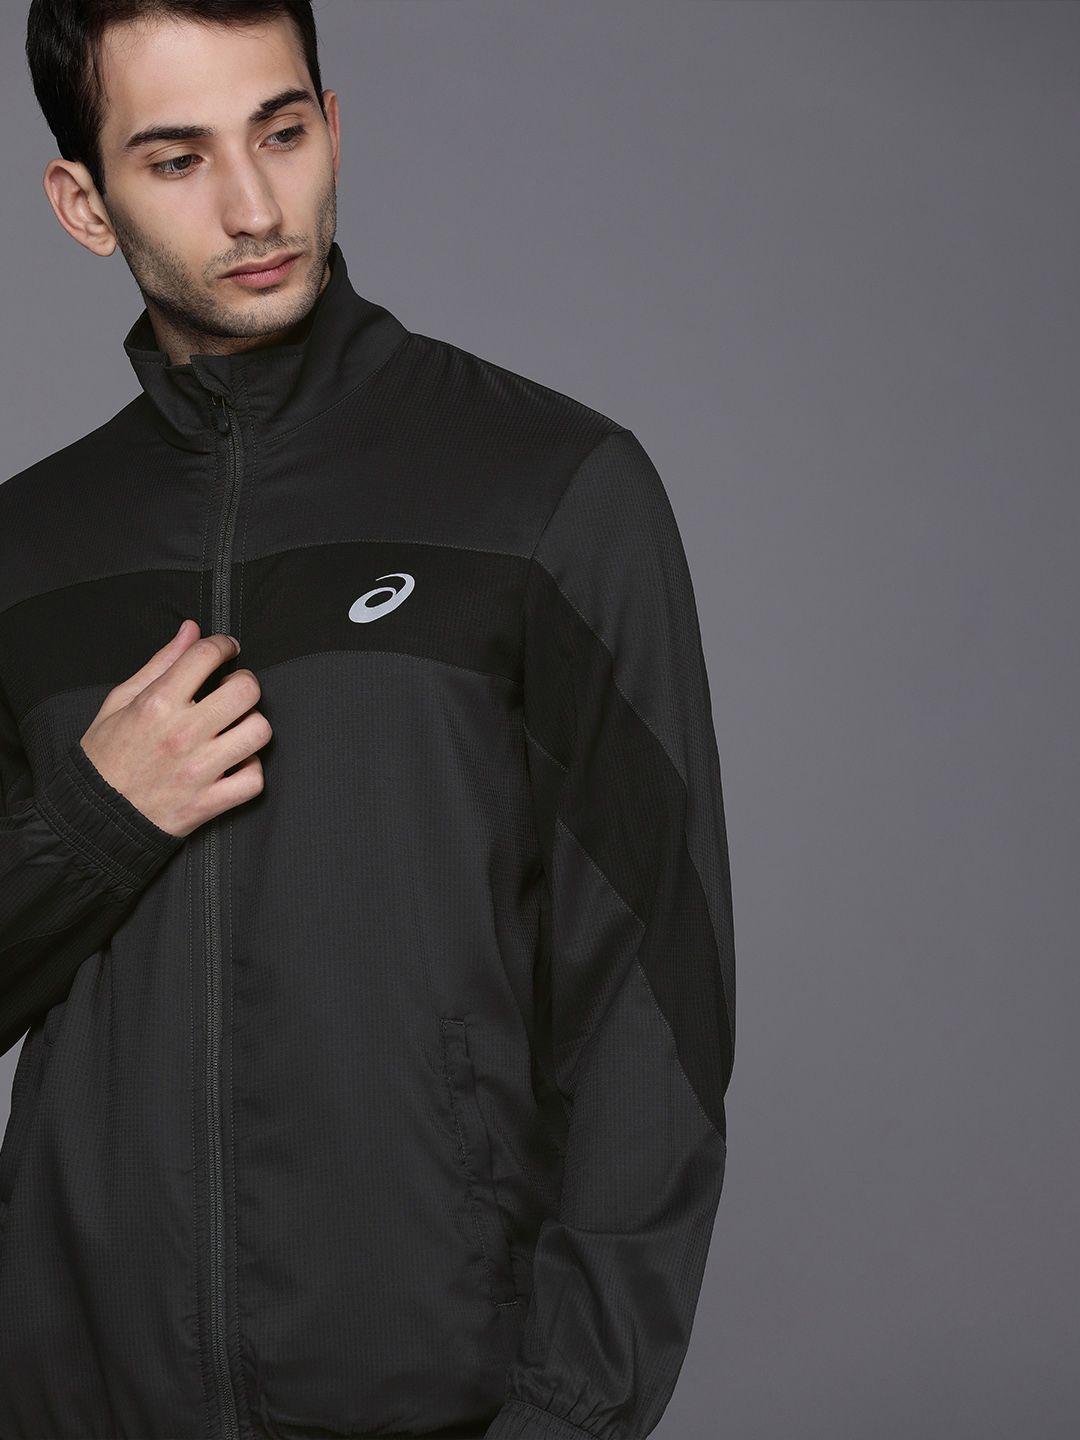 asics-men-charcoal-grey-&-black-lightweight-sporty-running-jacket